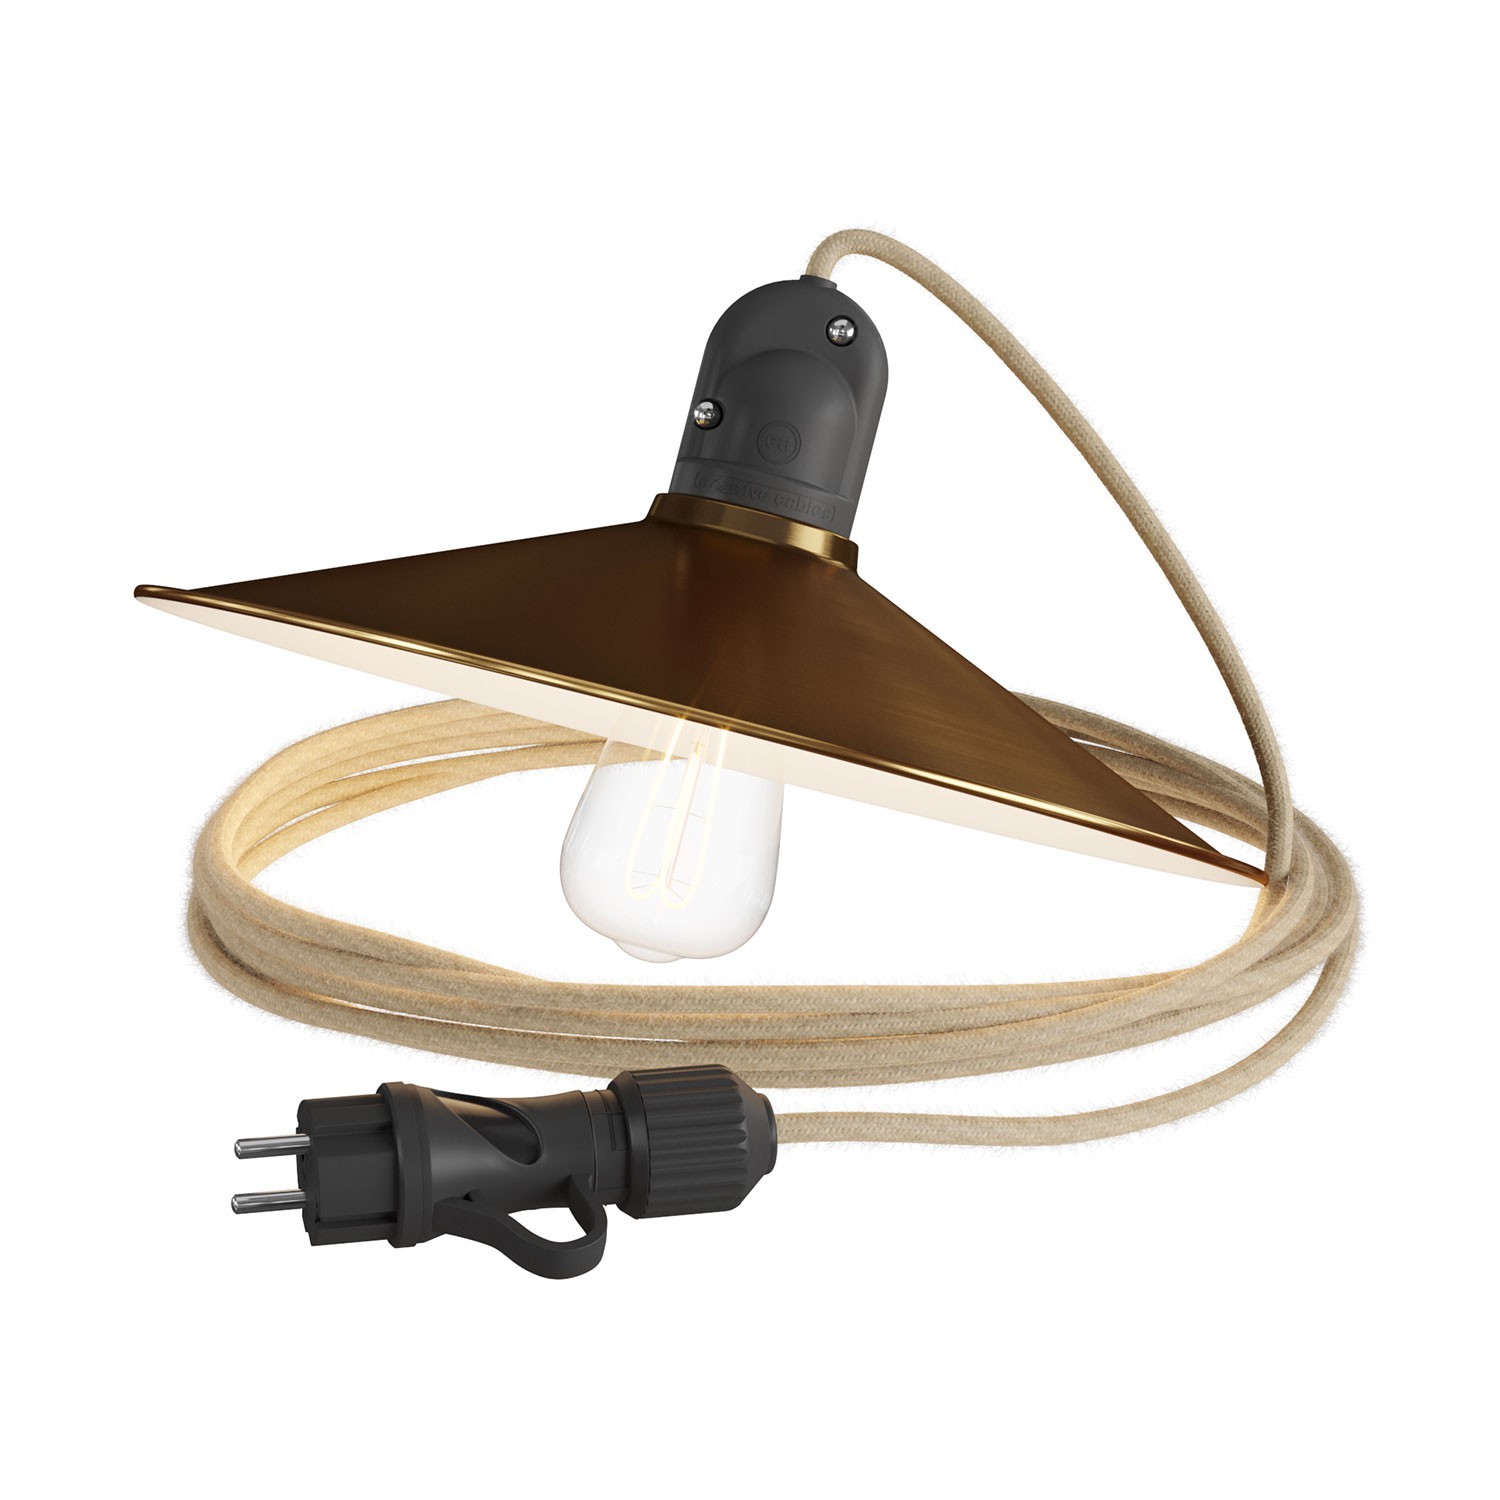 Snake Eiva met Swing-lampenkap, draagbare buitenlamp, 5 m strijkijzersnoer, IP65 waterdichte fitting en stekker